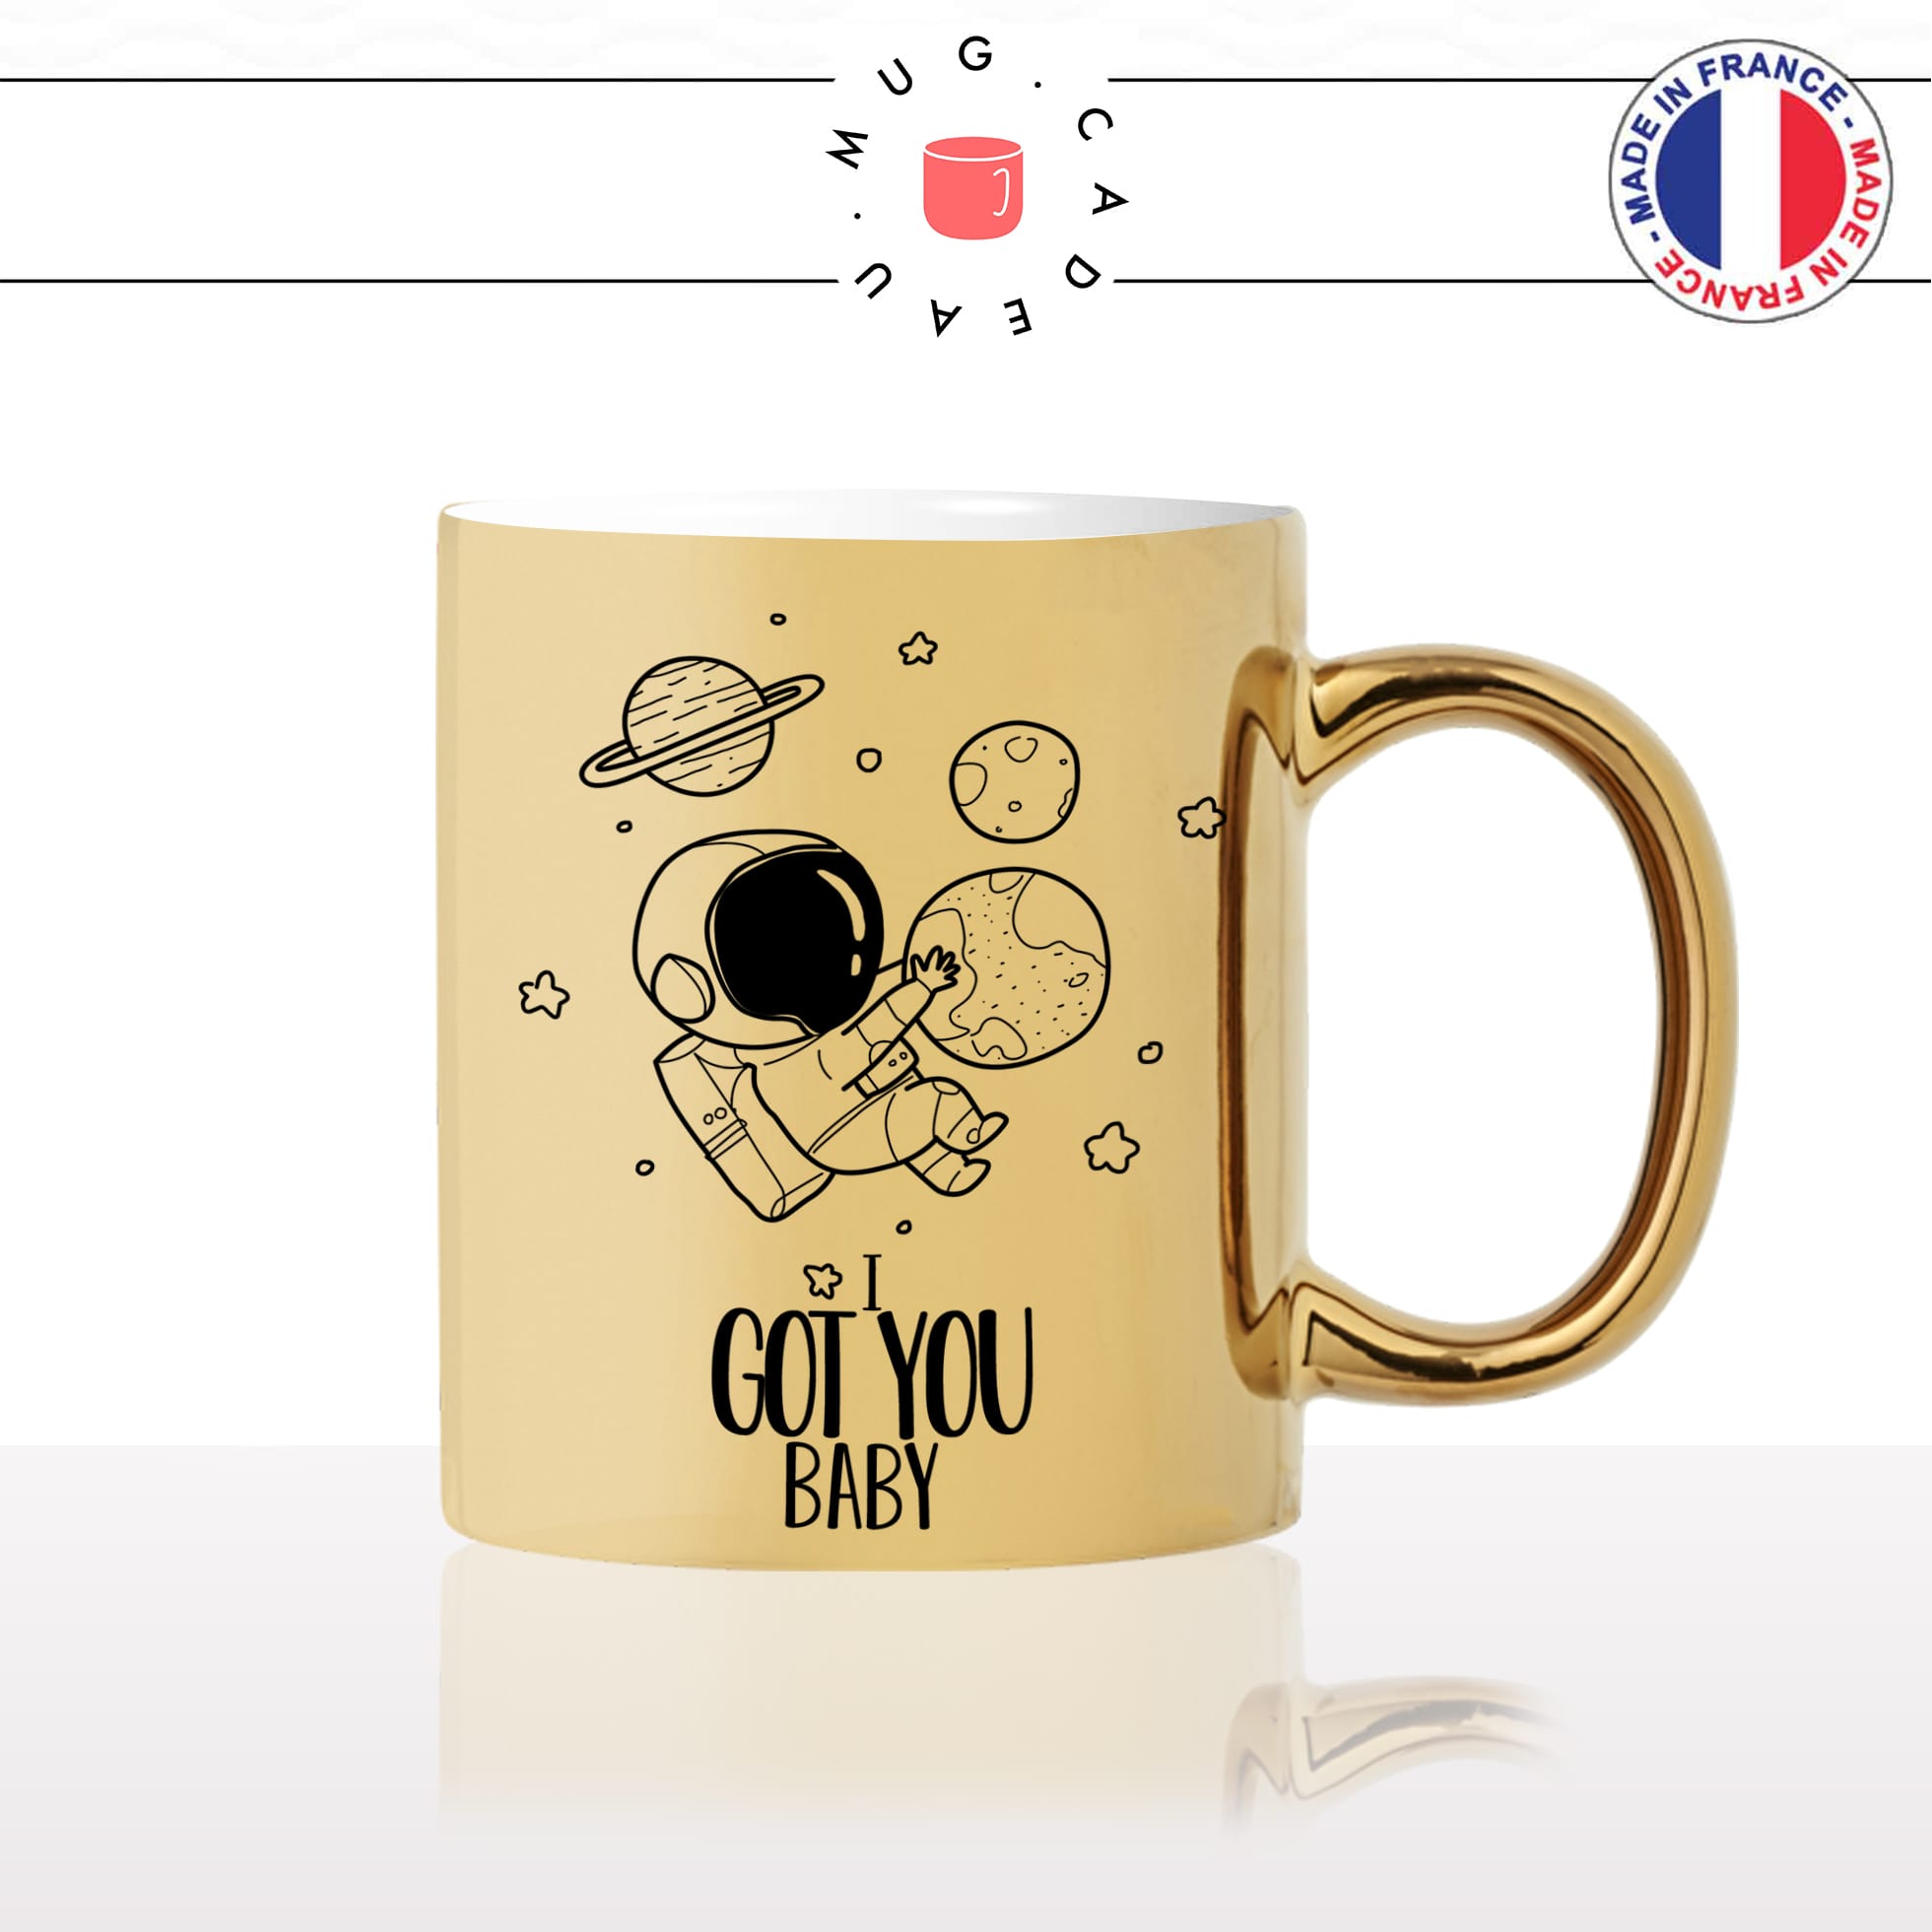 mug-tasse-or-doré-gold-espace-astronaute-i-got-you-baby-planete-terre-saturne-nasa-cool-idée-cadeau-drole-original-fun-café-thé-personnalisé2-min